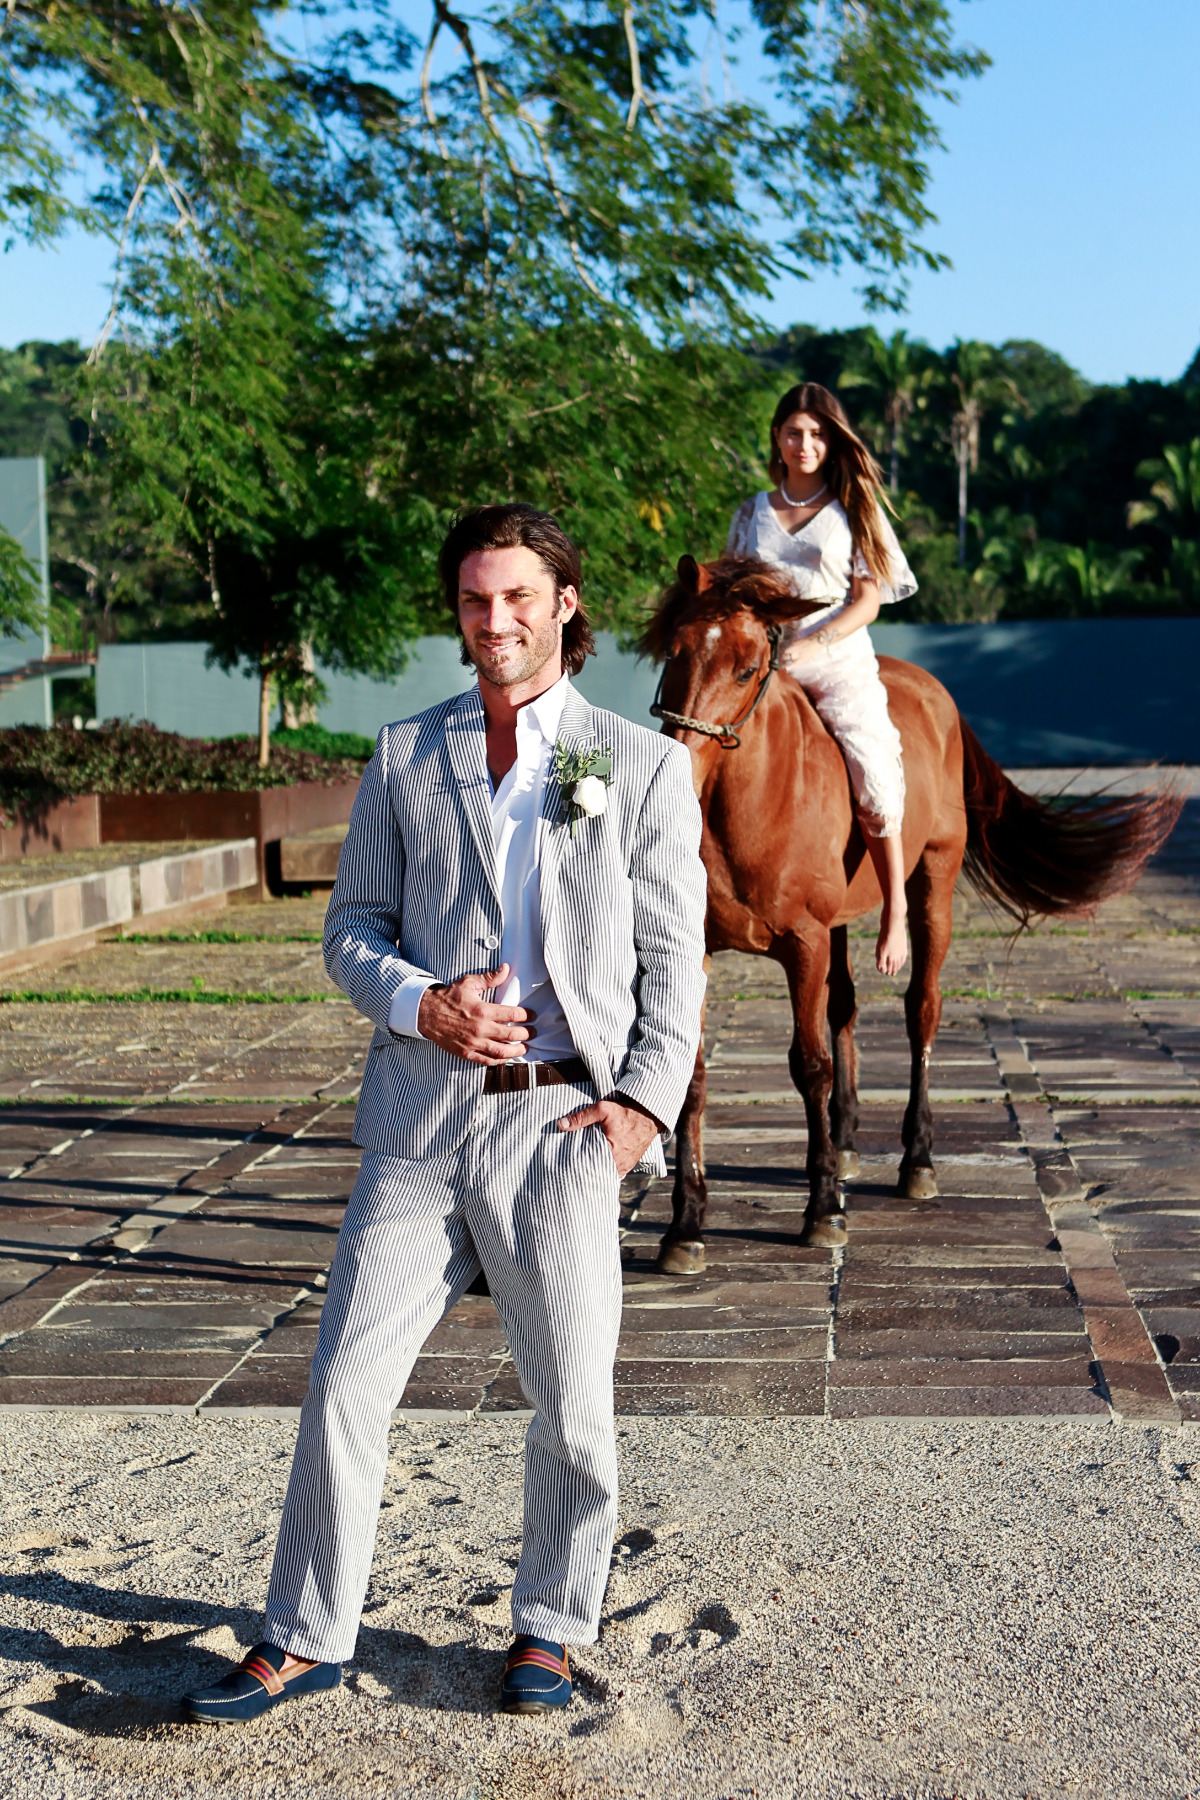 Groom awaits for his bride as she arrives on horseback